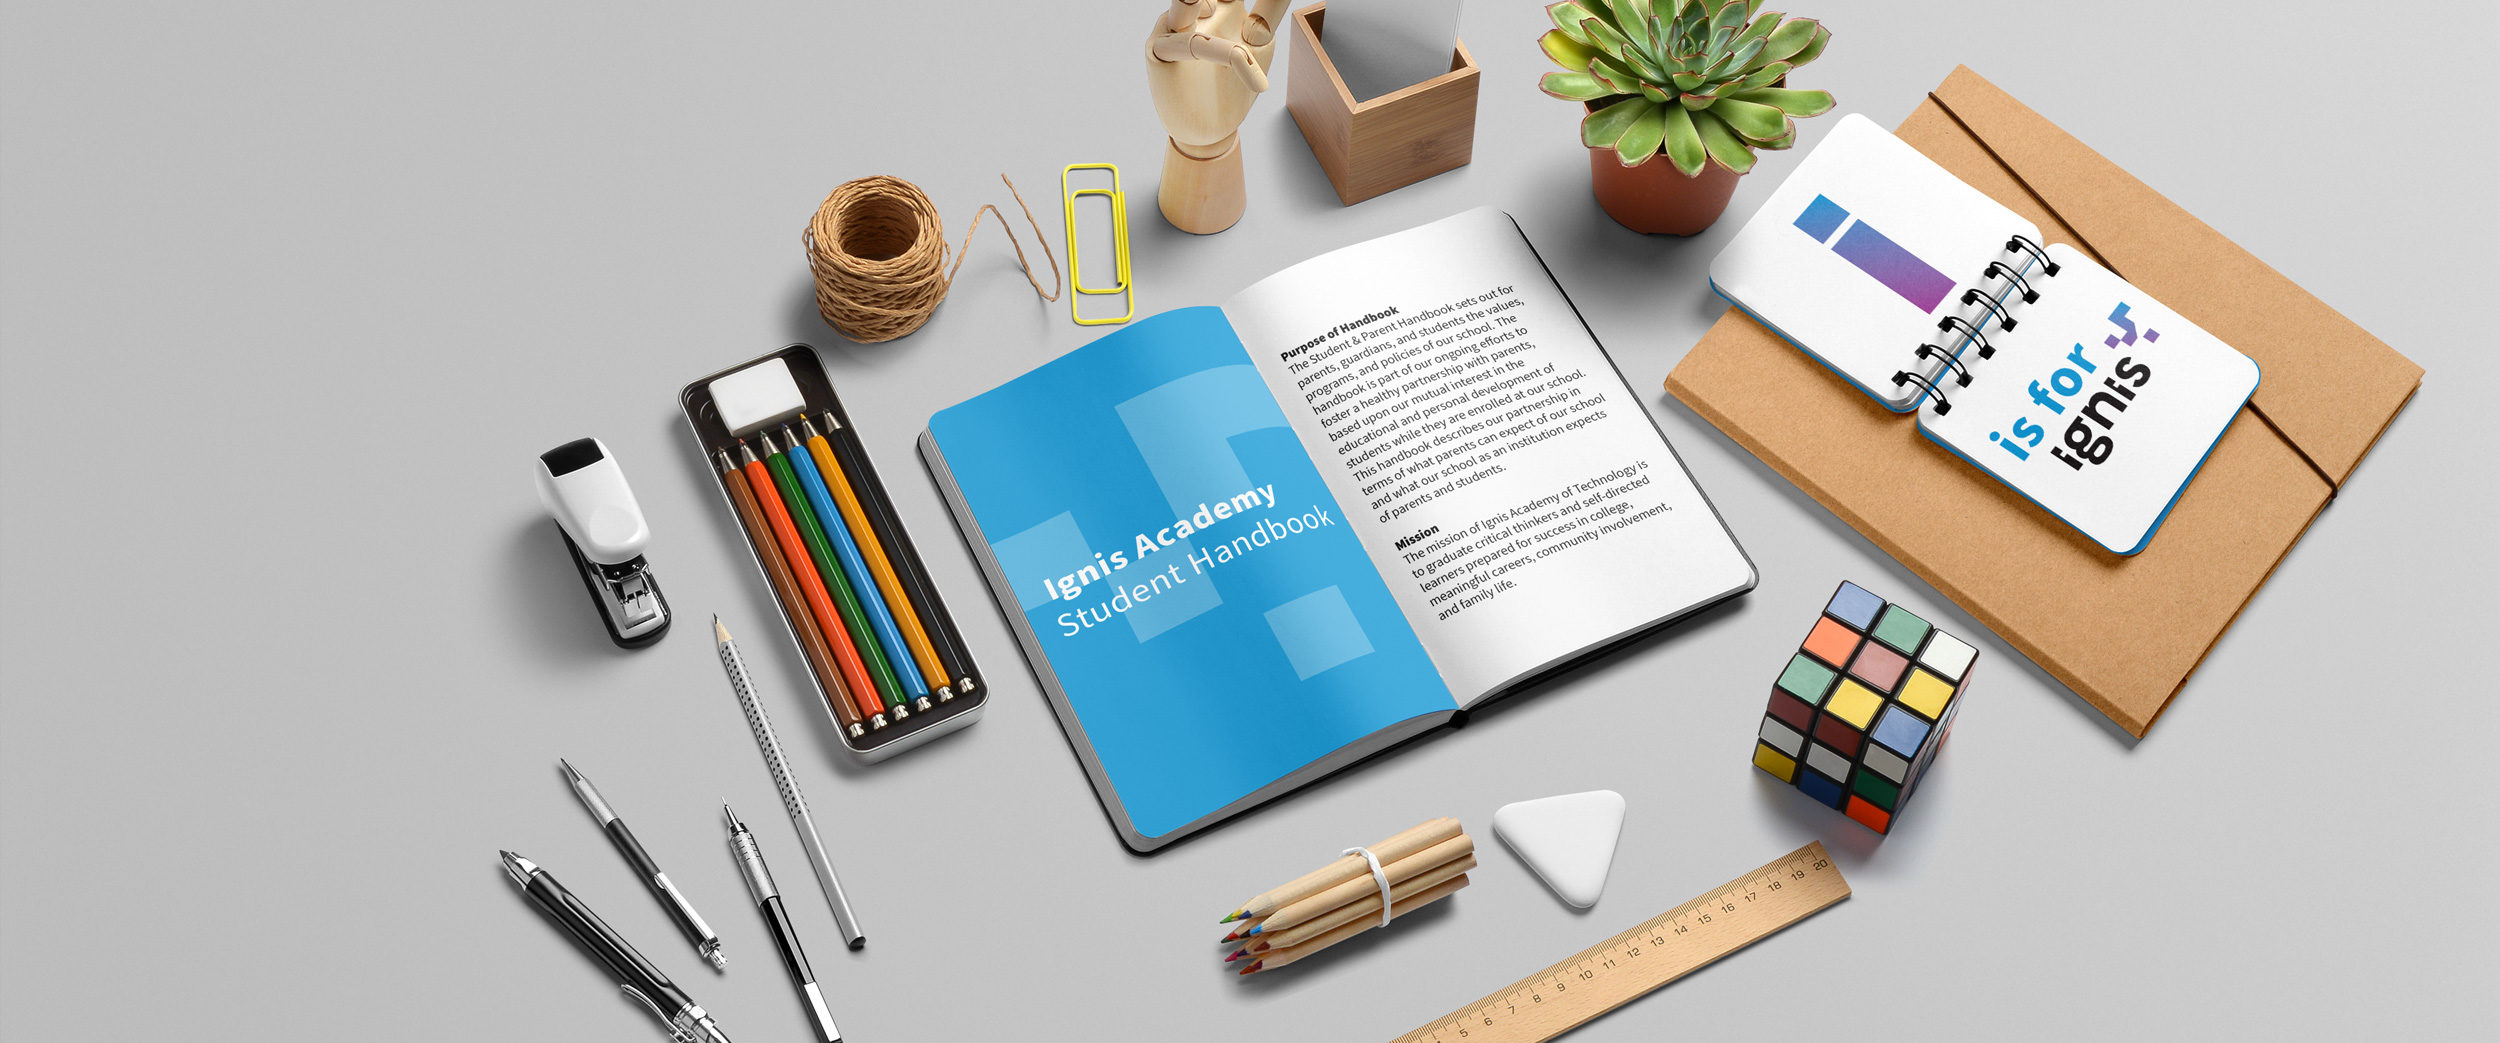 classroom materials printed handbook and flipbook